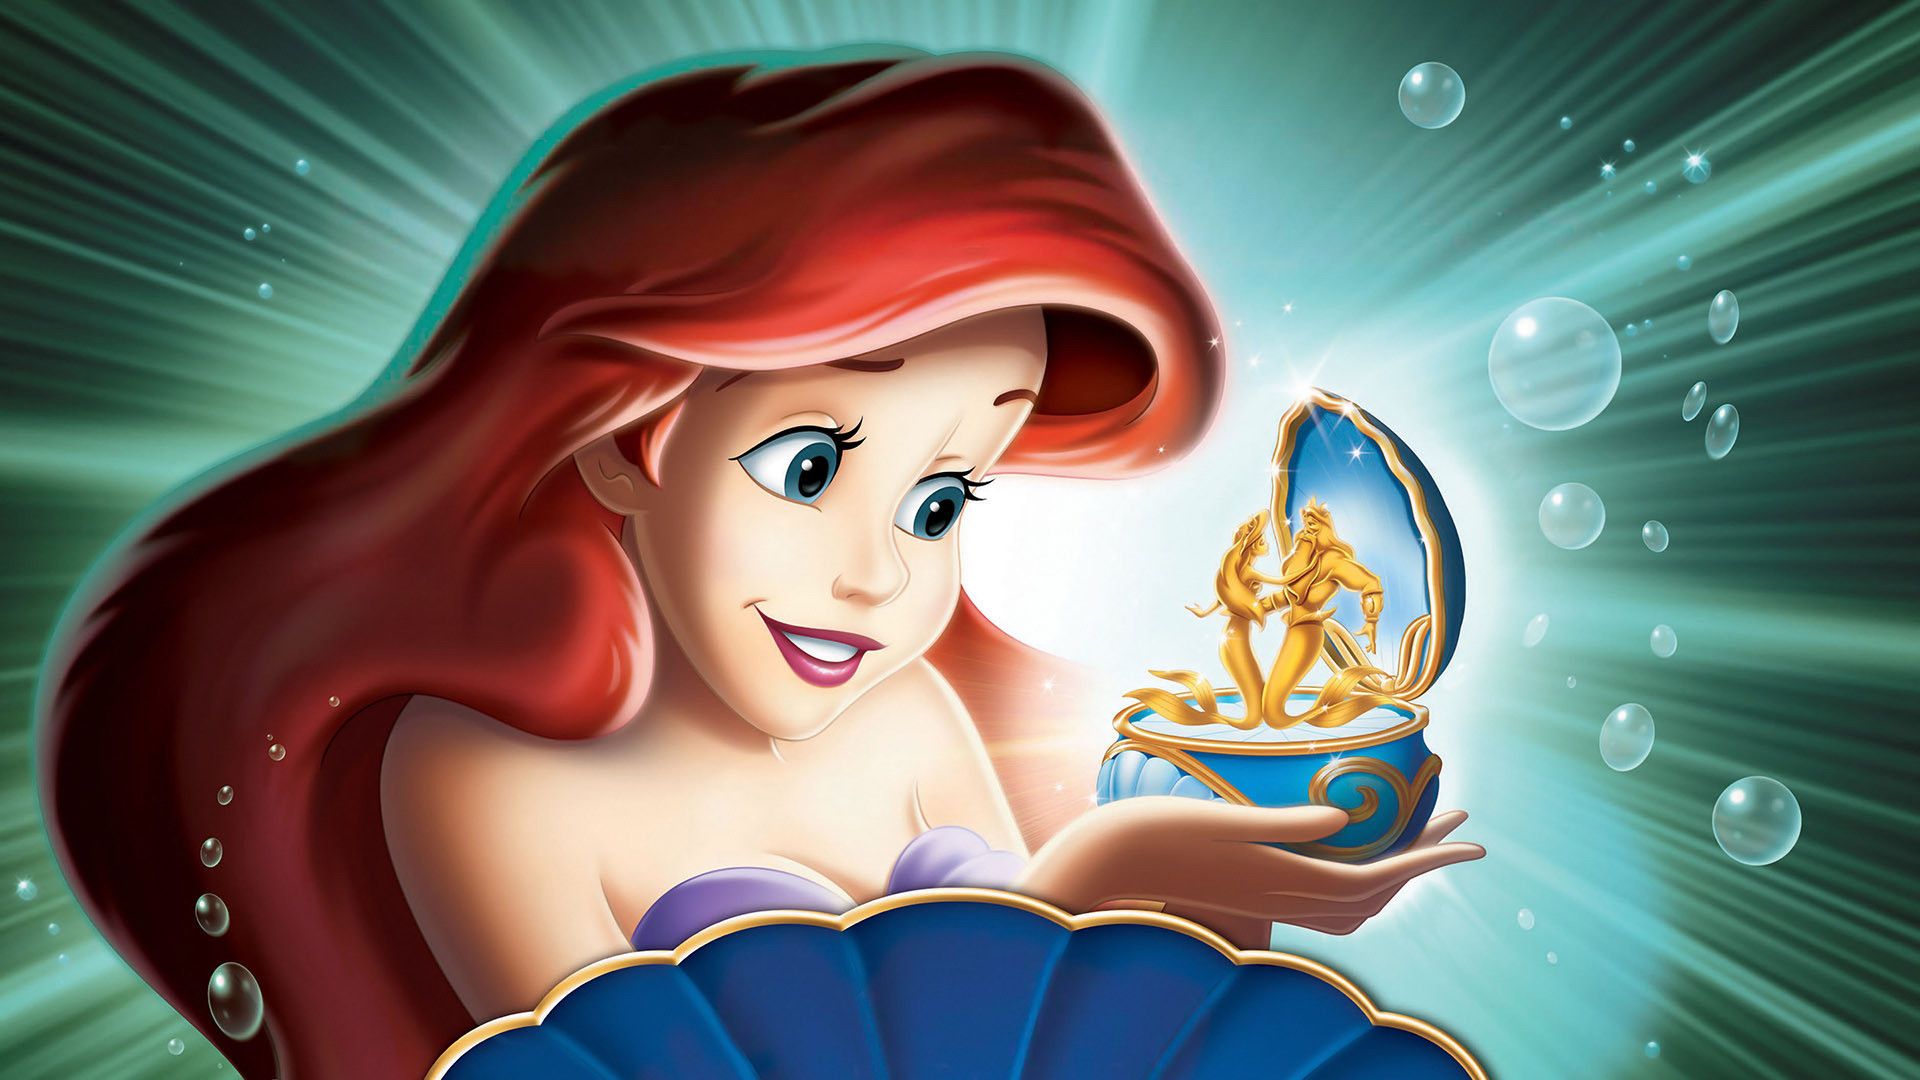 The Little Mermaid: Ariel's Beginning background